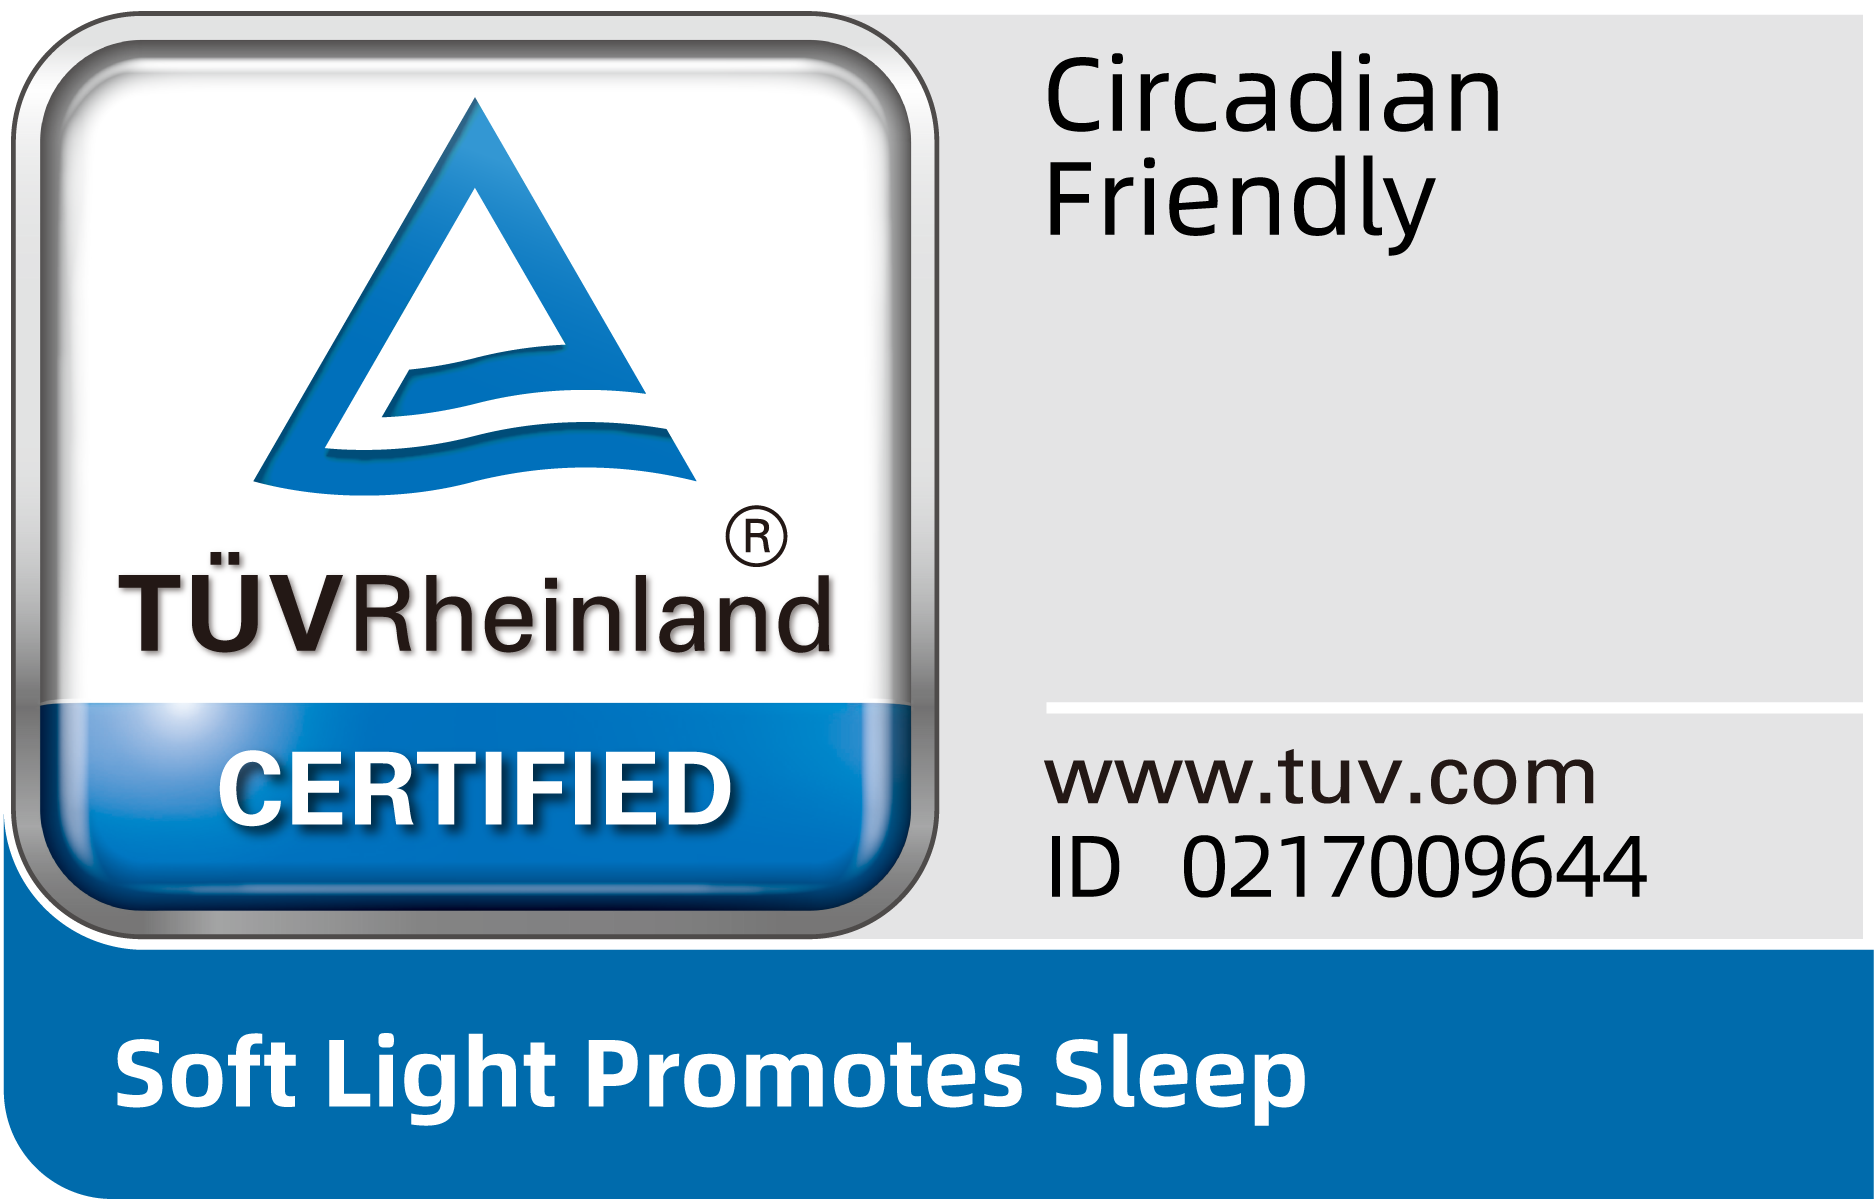 Certifikat „Circadian Friendly” tvrtke TÜV Rheinland. 2